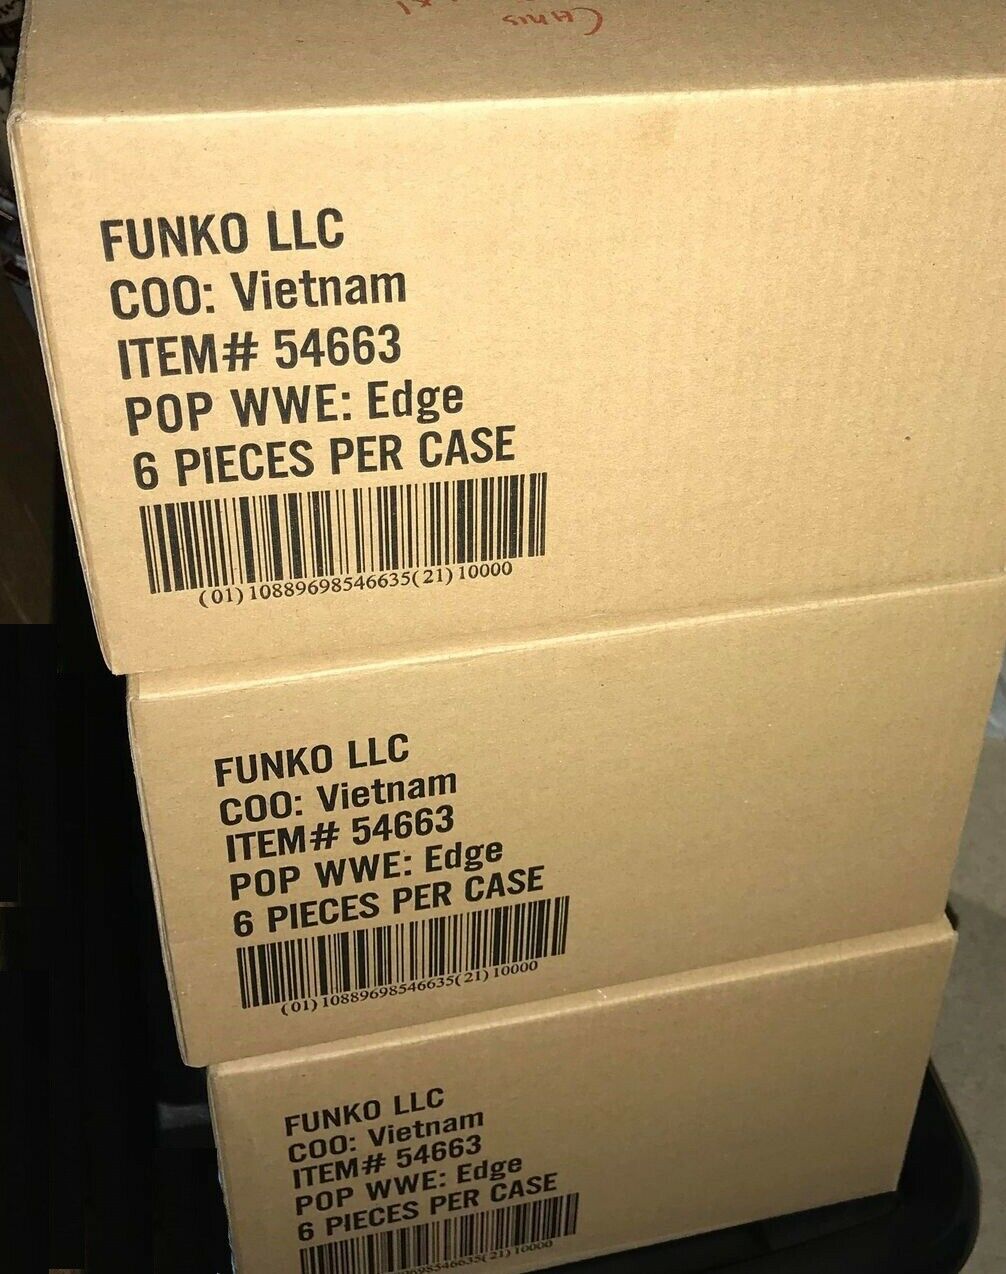 Edge WWE Funko Pop! Vinyl Signed Figure (Inscribed on side window)